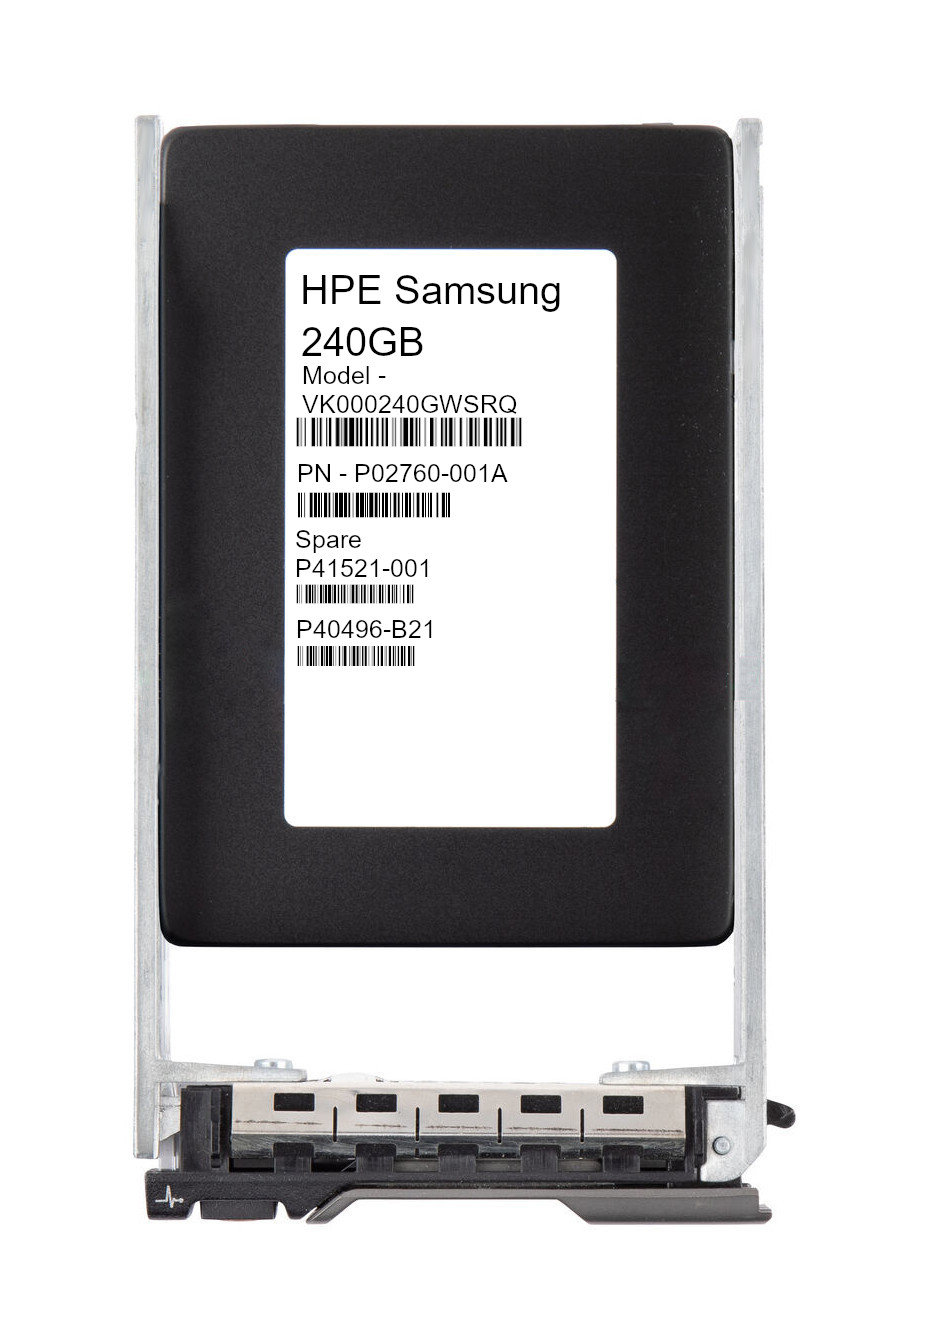 HPE Samsung 240GB VK000240GWSRQ 2.5" SSD SATA P02760-001 P41521-001 P40496-B21 - Click Image to Close